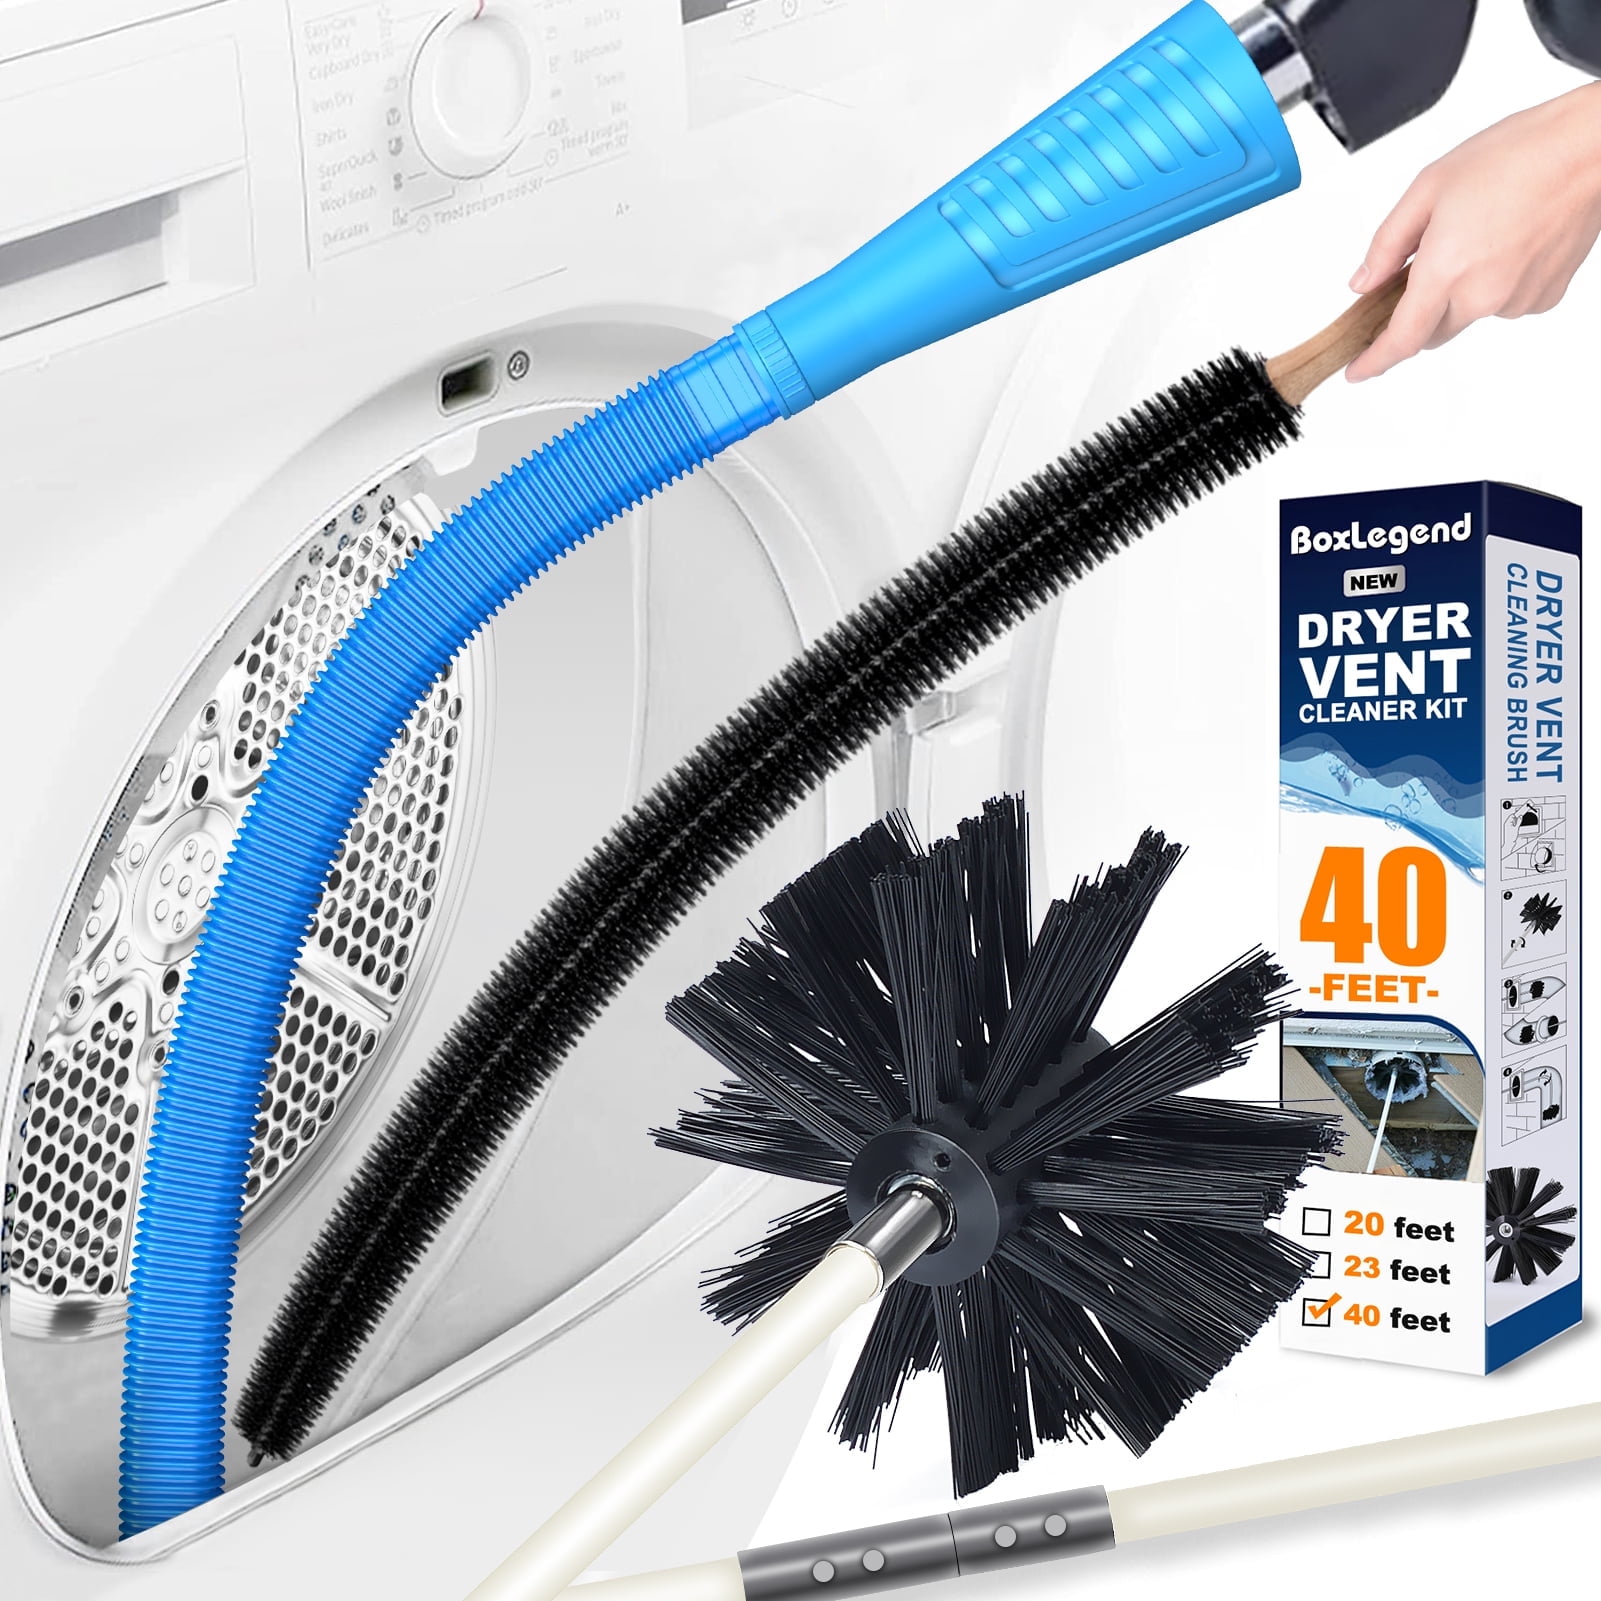 Yinrunx Dryer Vent Cleaning Brush, Dryer Vent Cleaner Kit, Lint